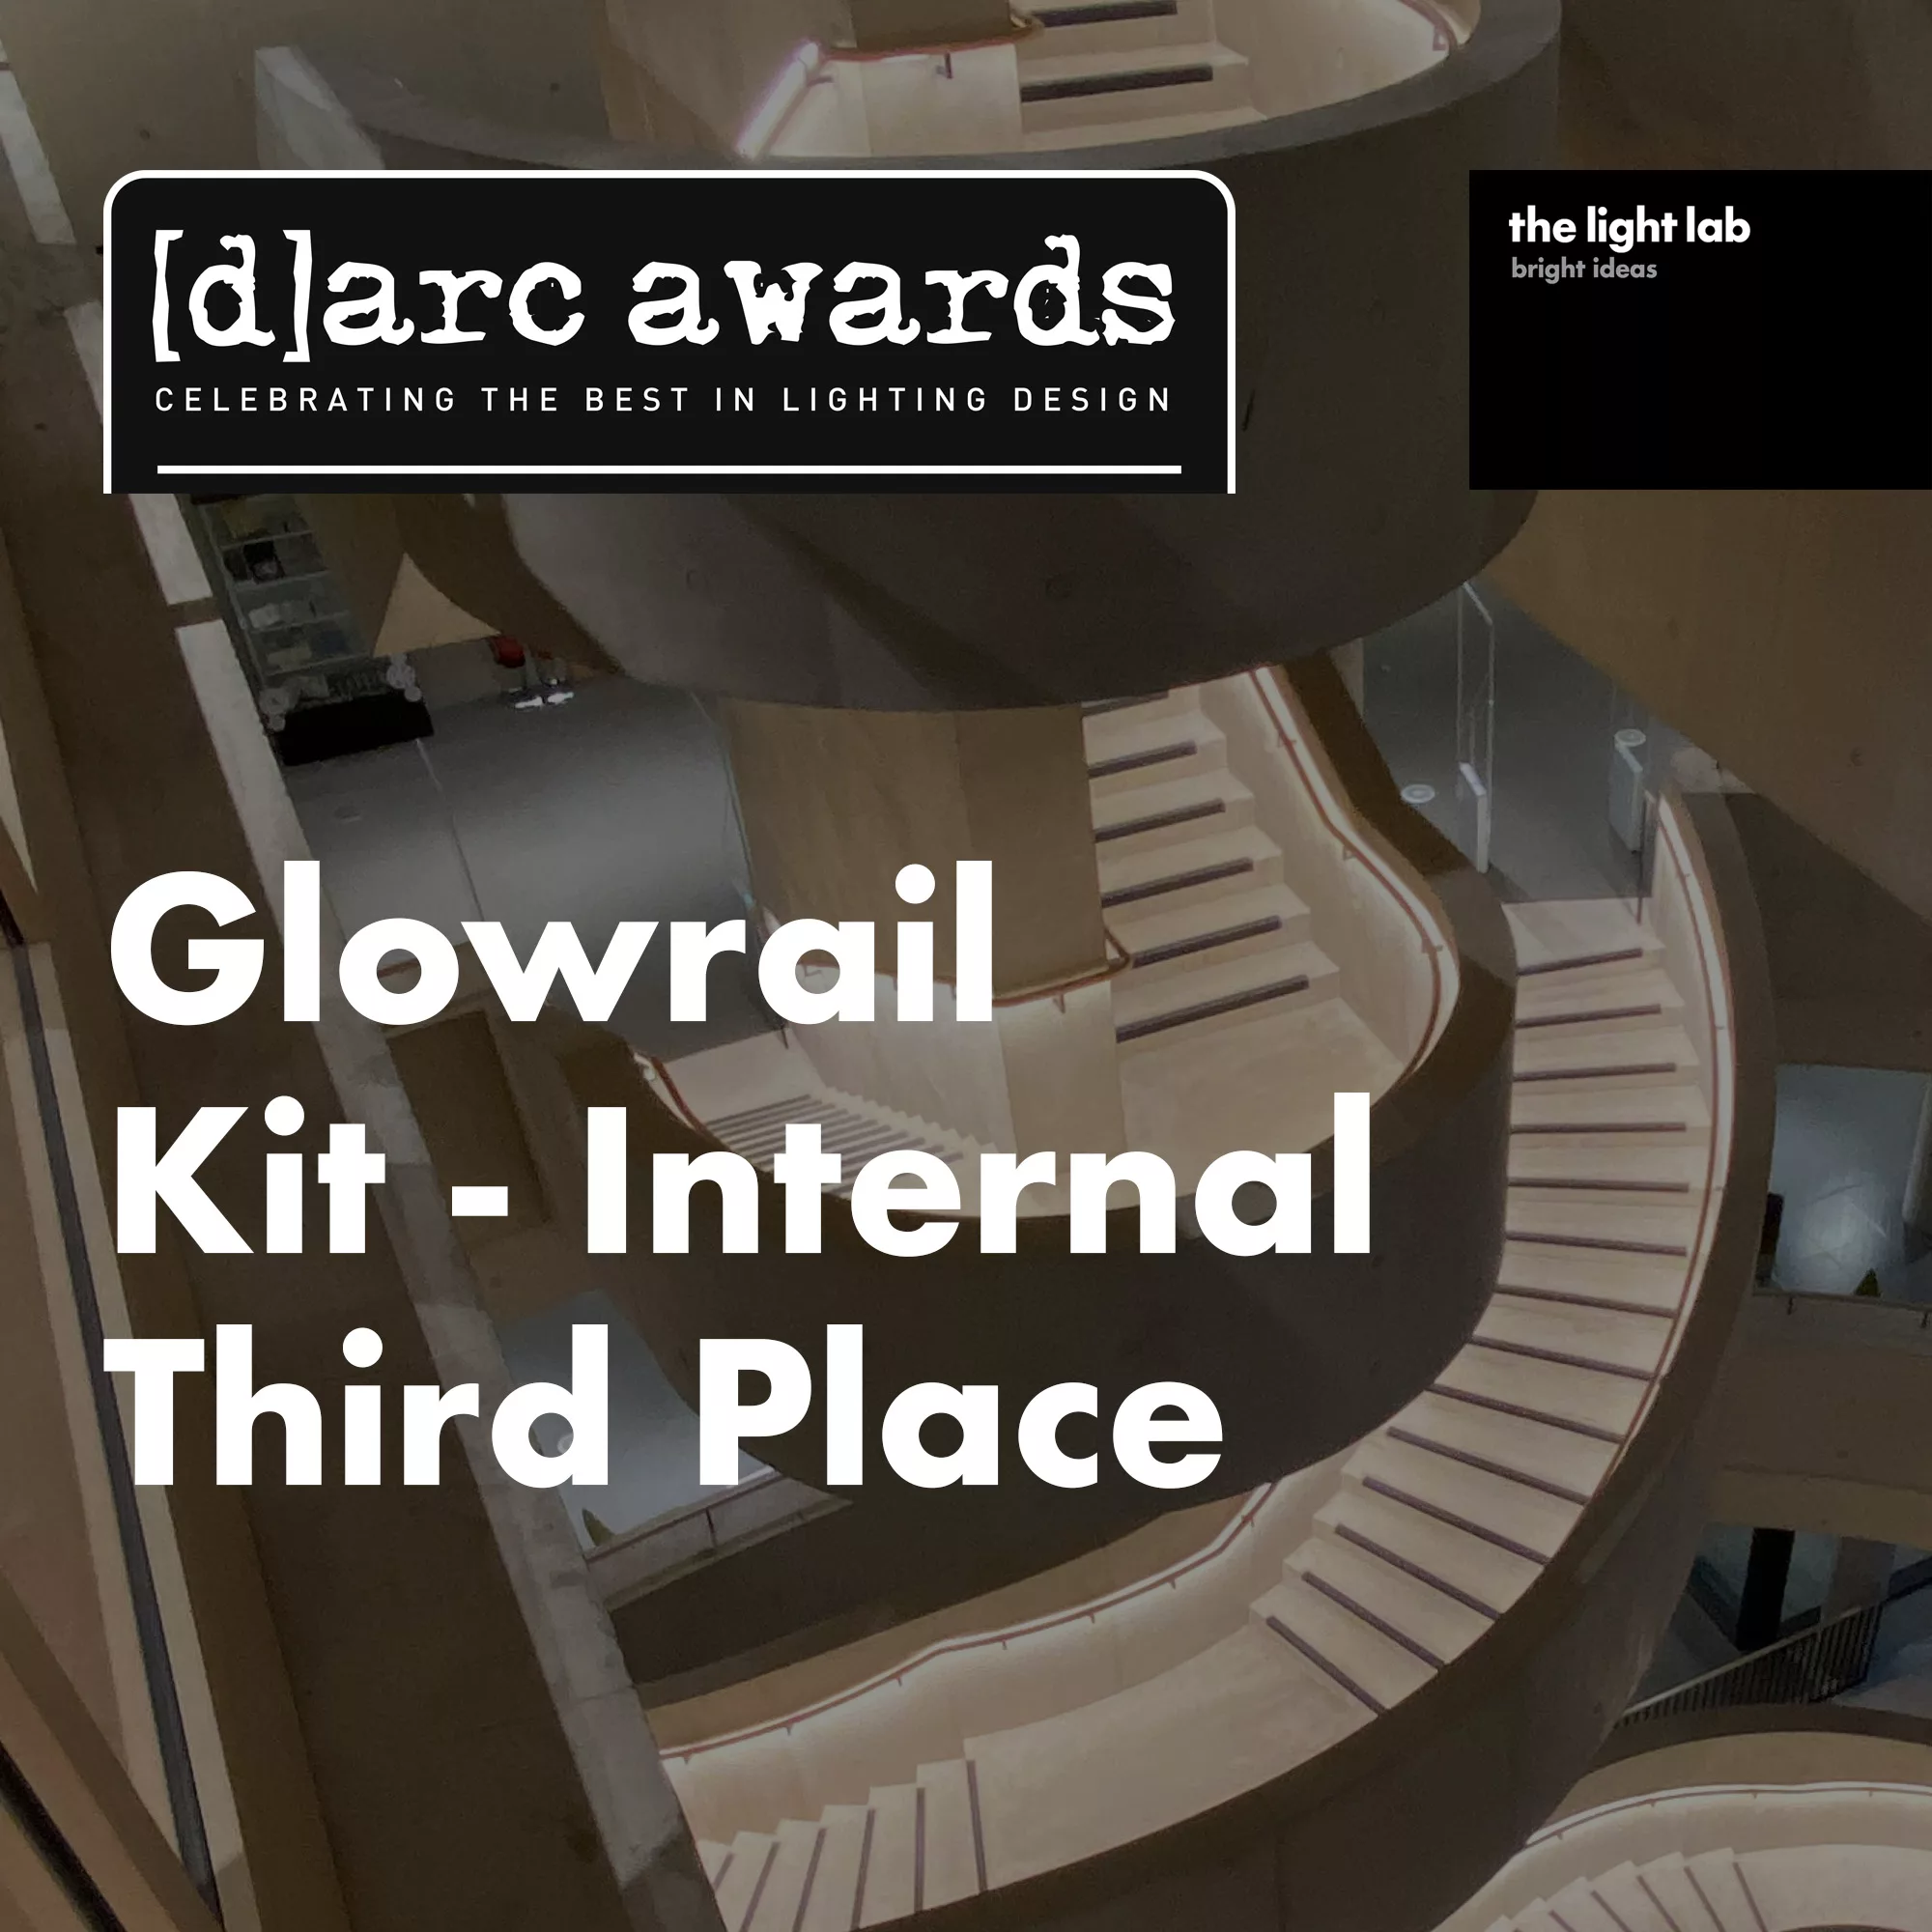 Glowrail | DARC Awards | illuminated handrail | The Light Lab